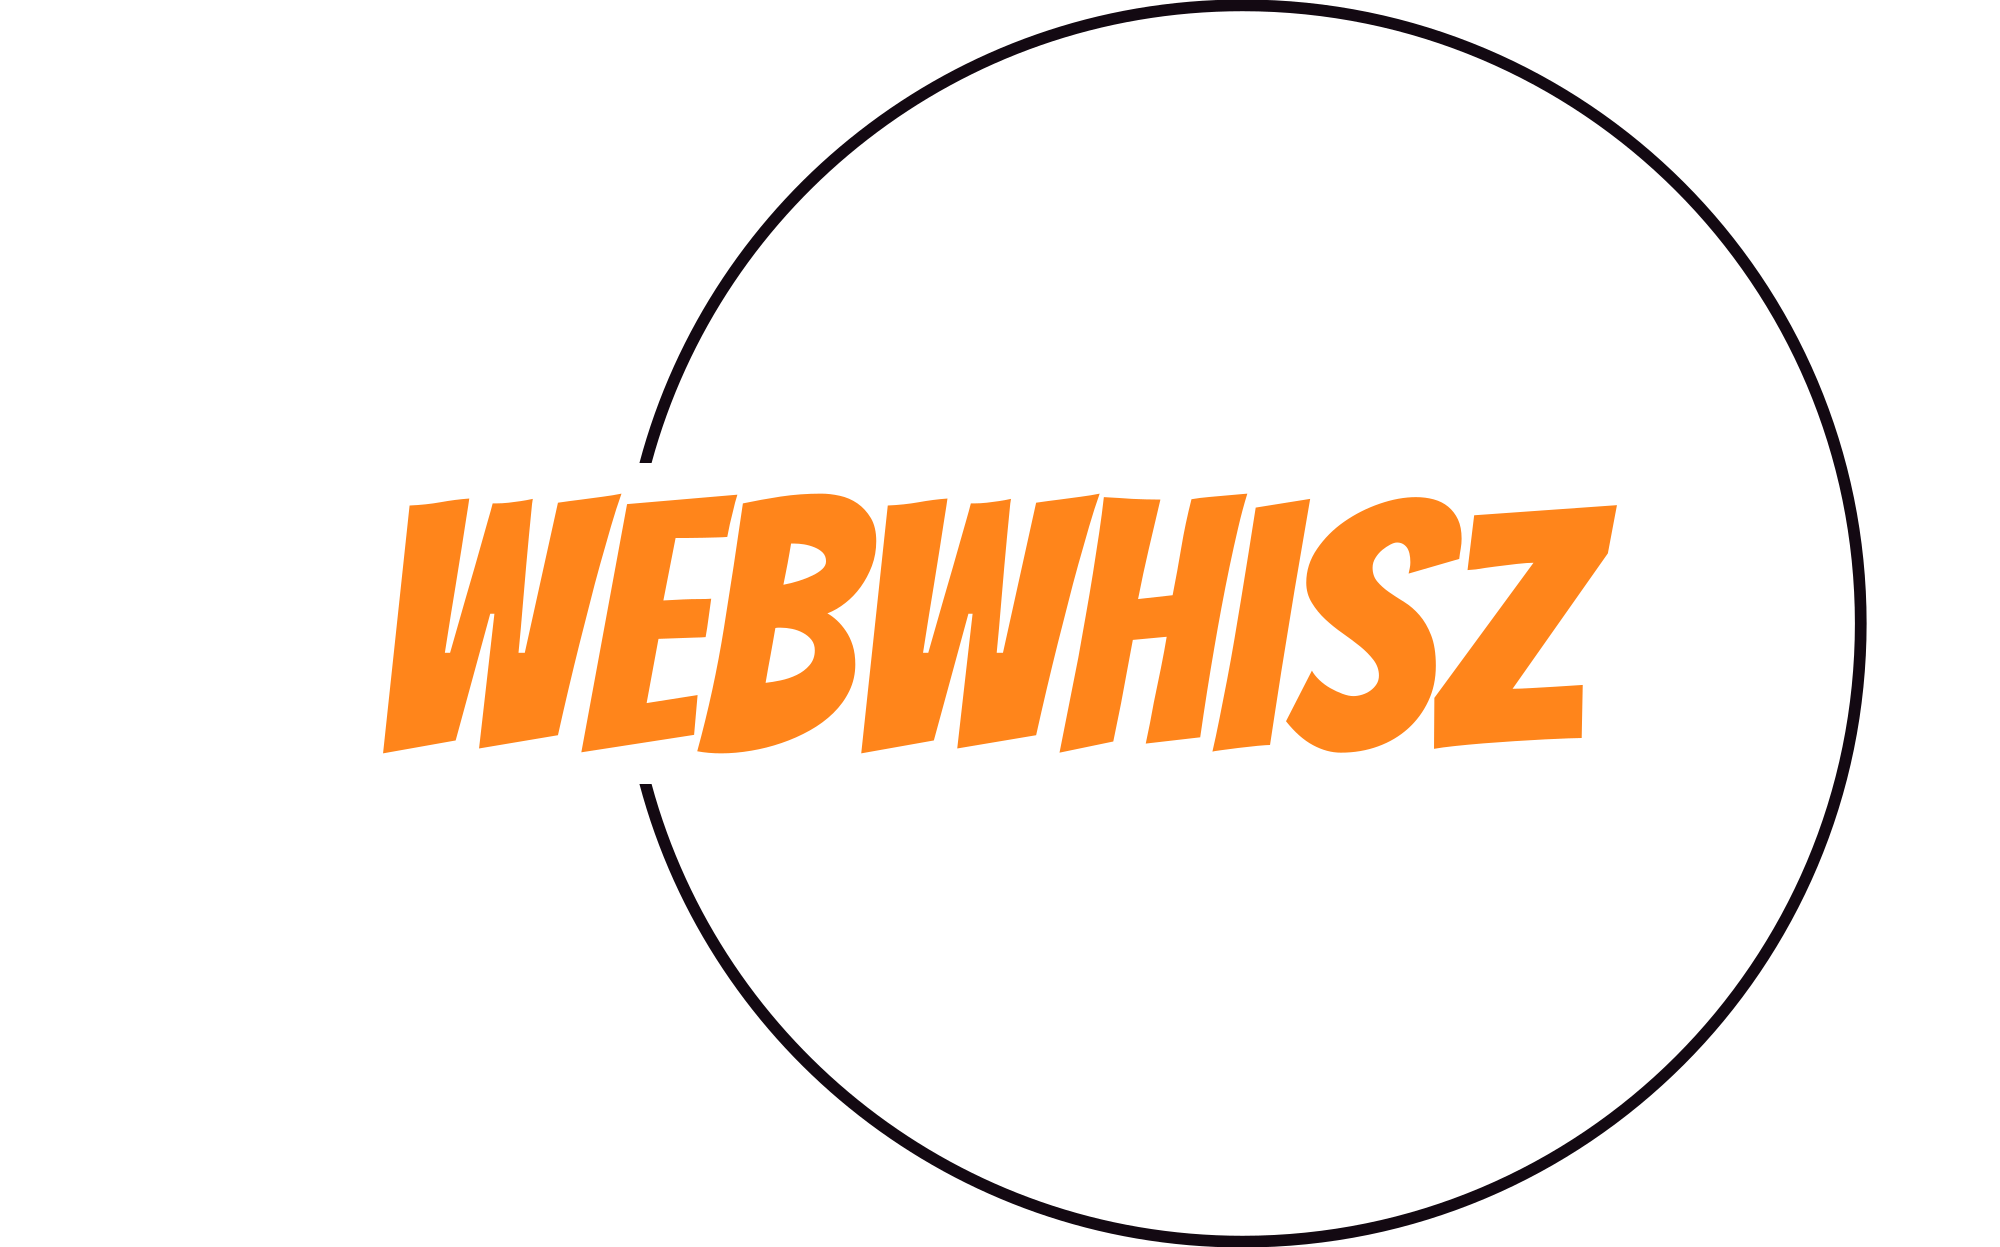 Webwhisz